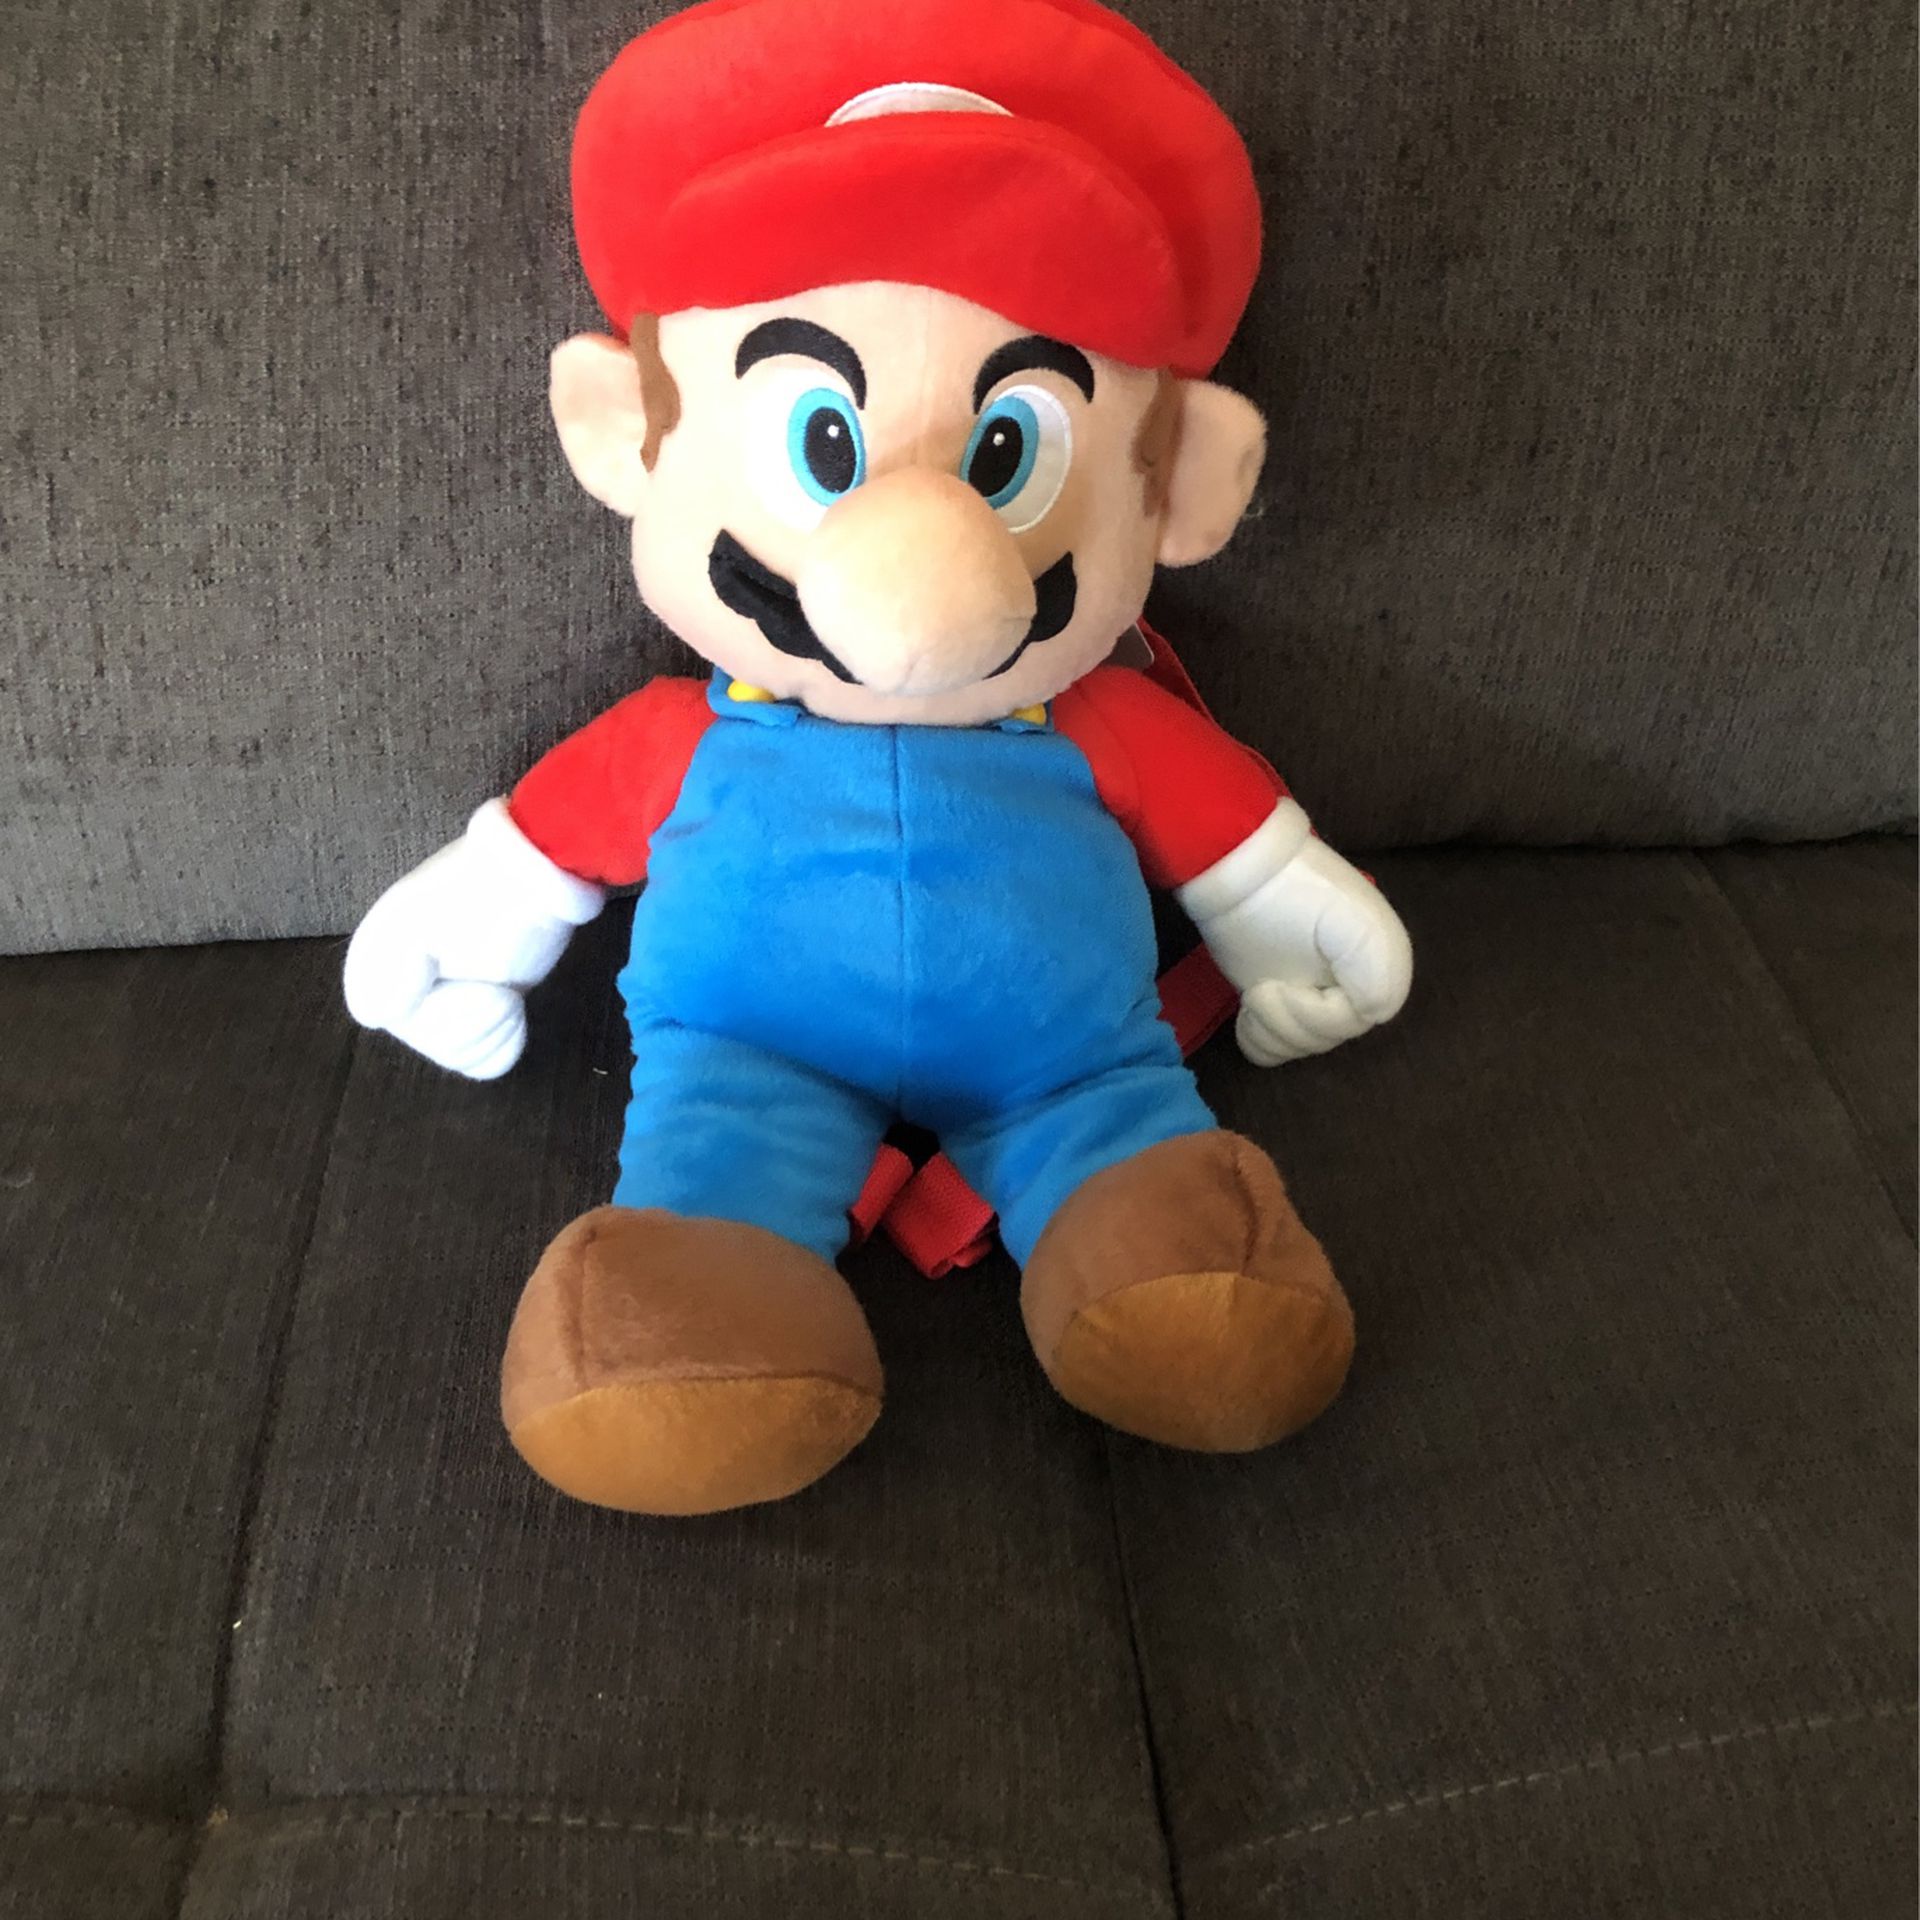 Mario Backpack plushy